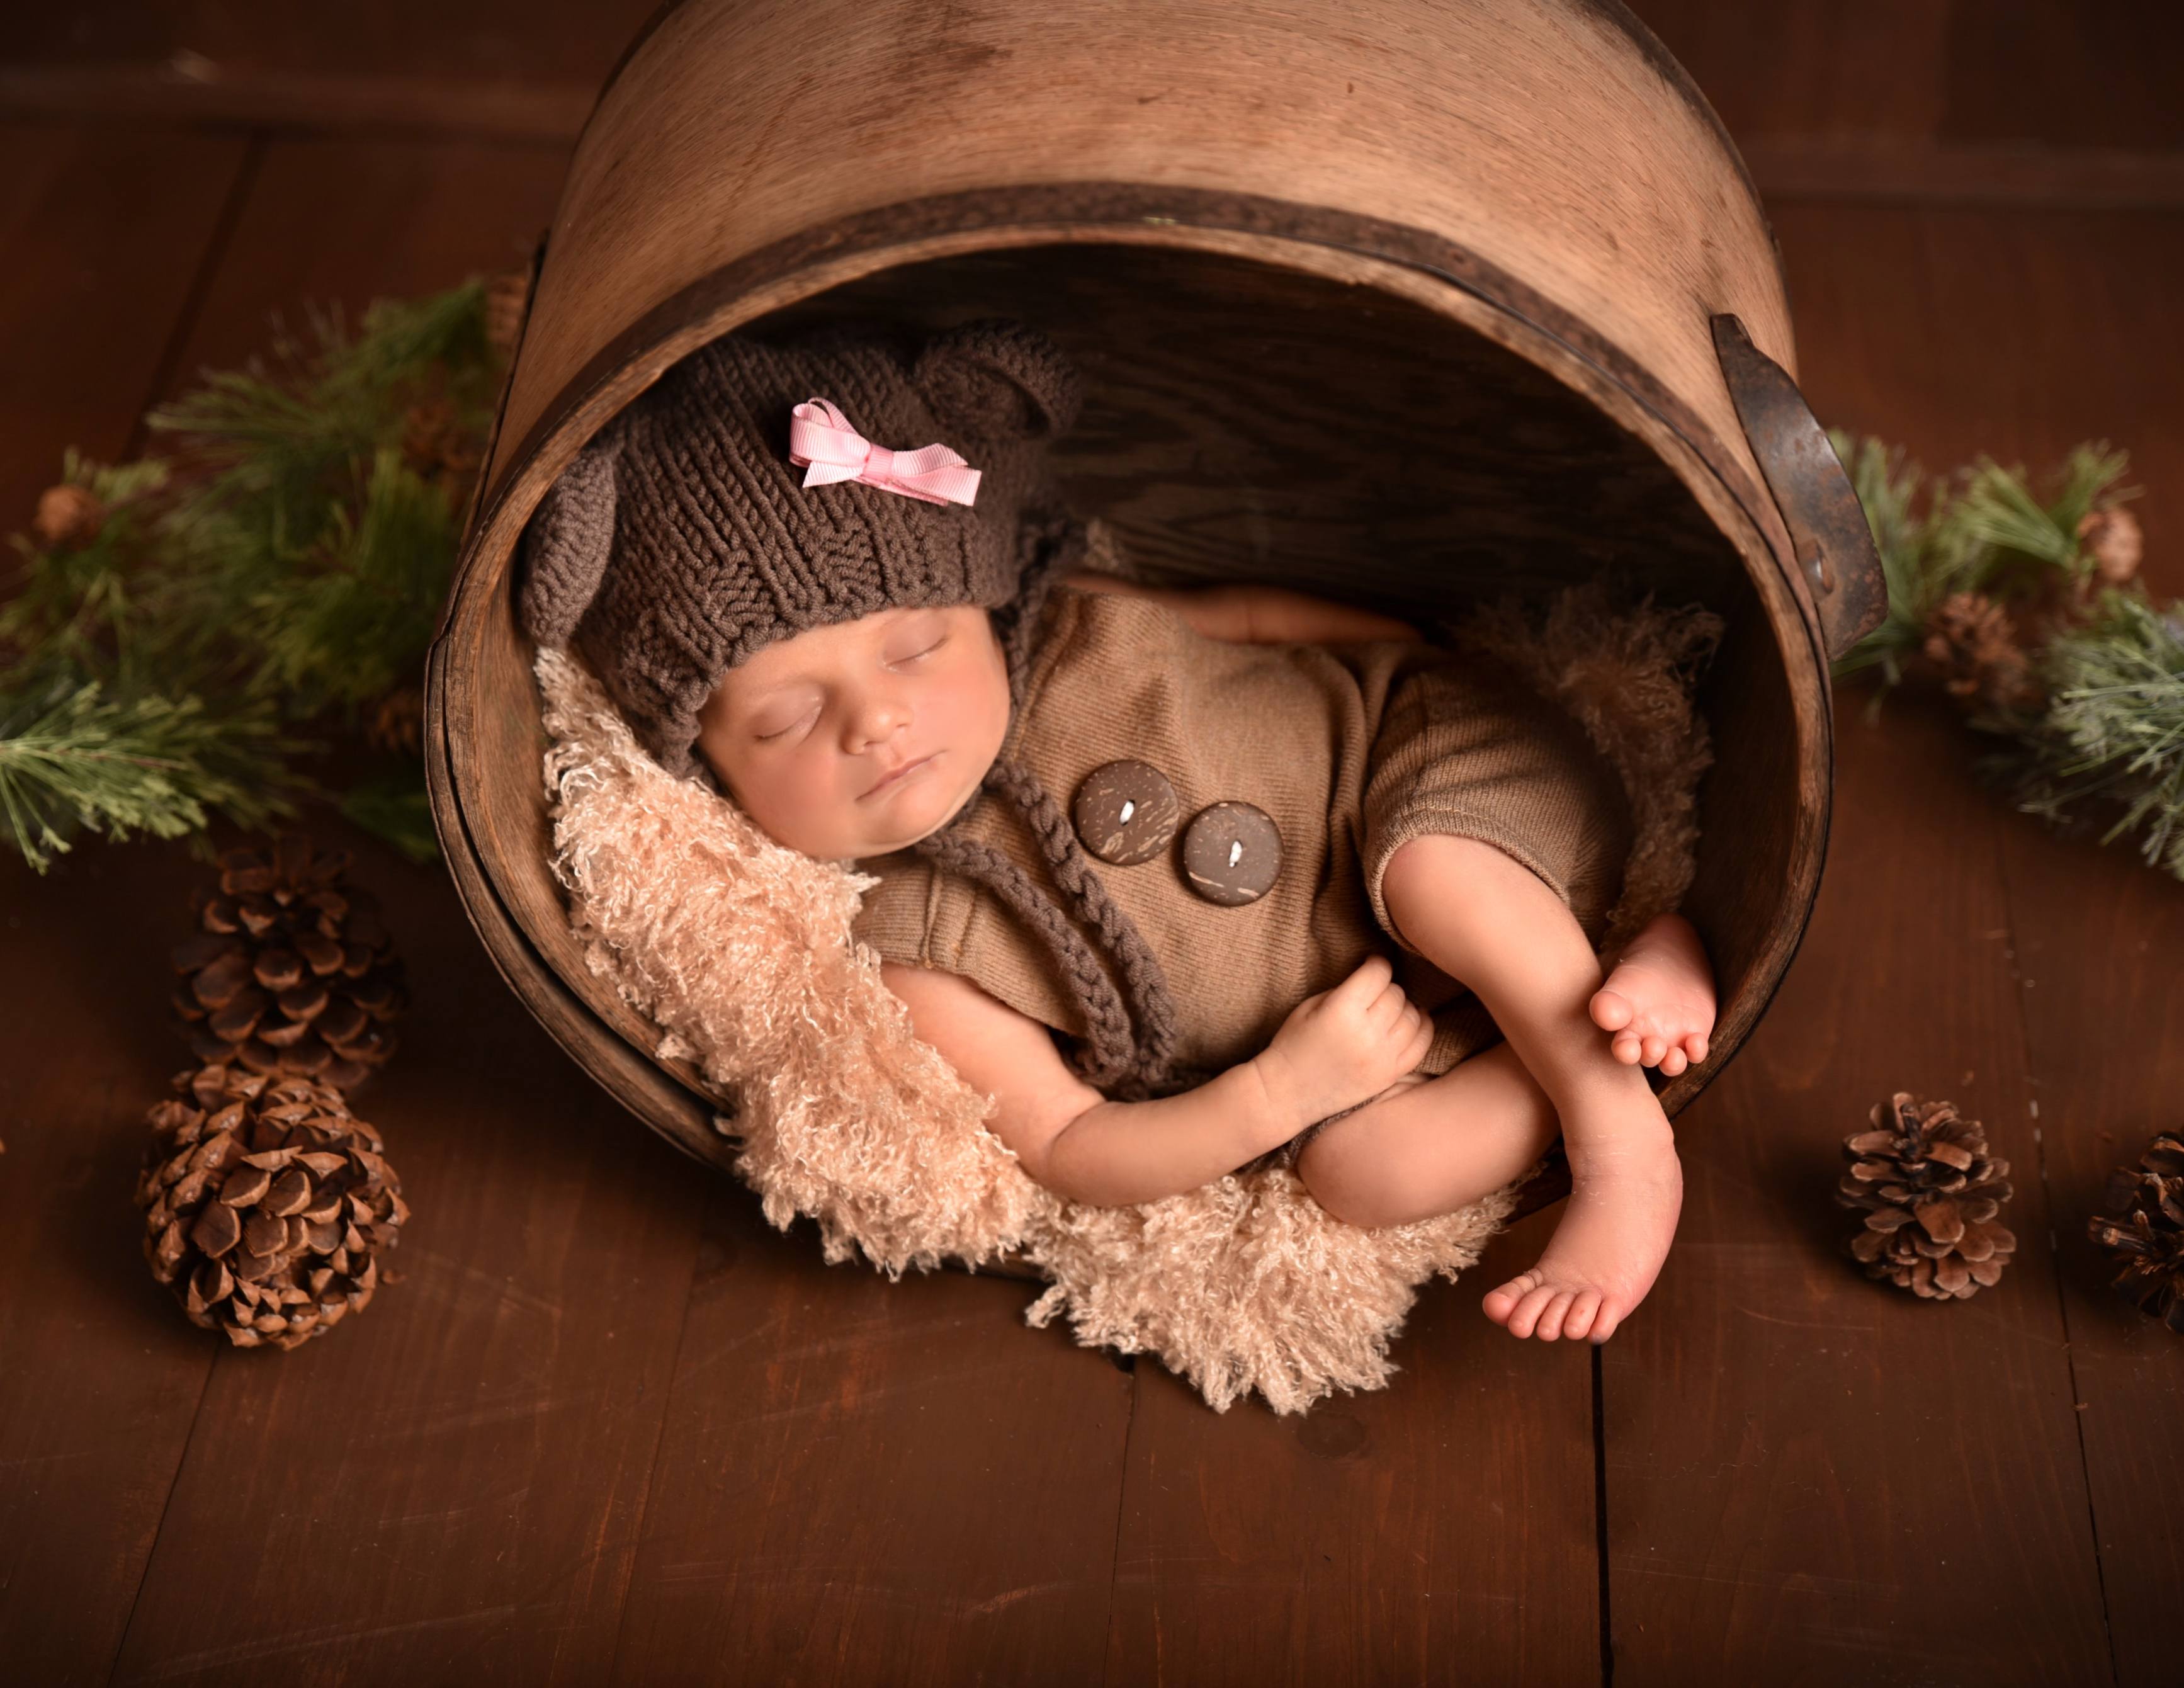 New Hampshire Newborn Photographer 1 1 - Portfolio: Infant Photography